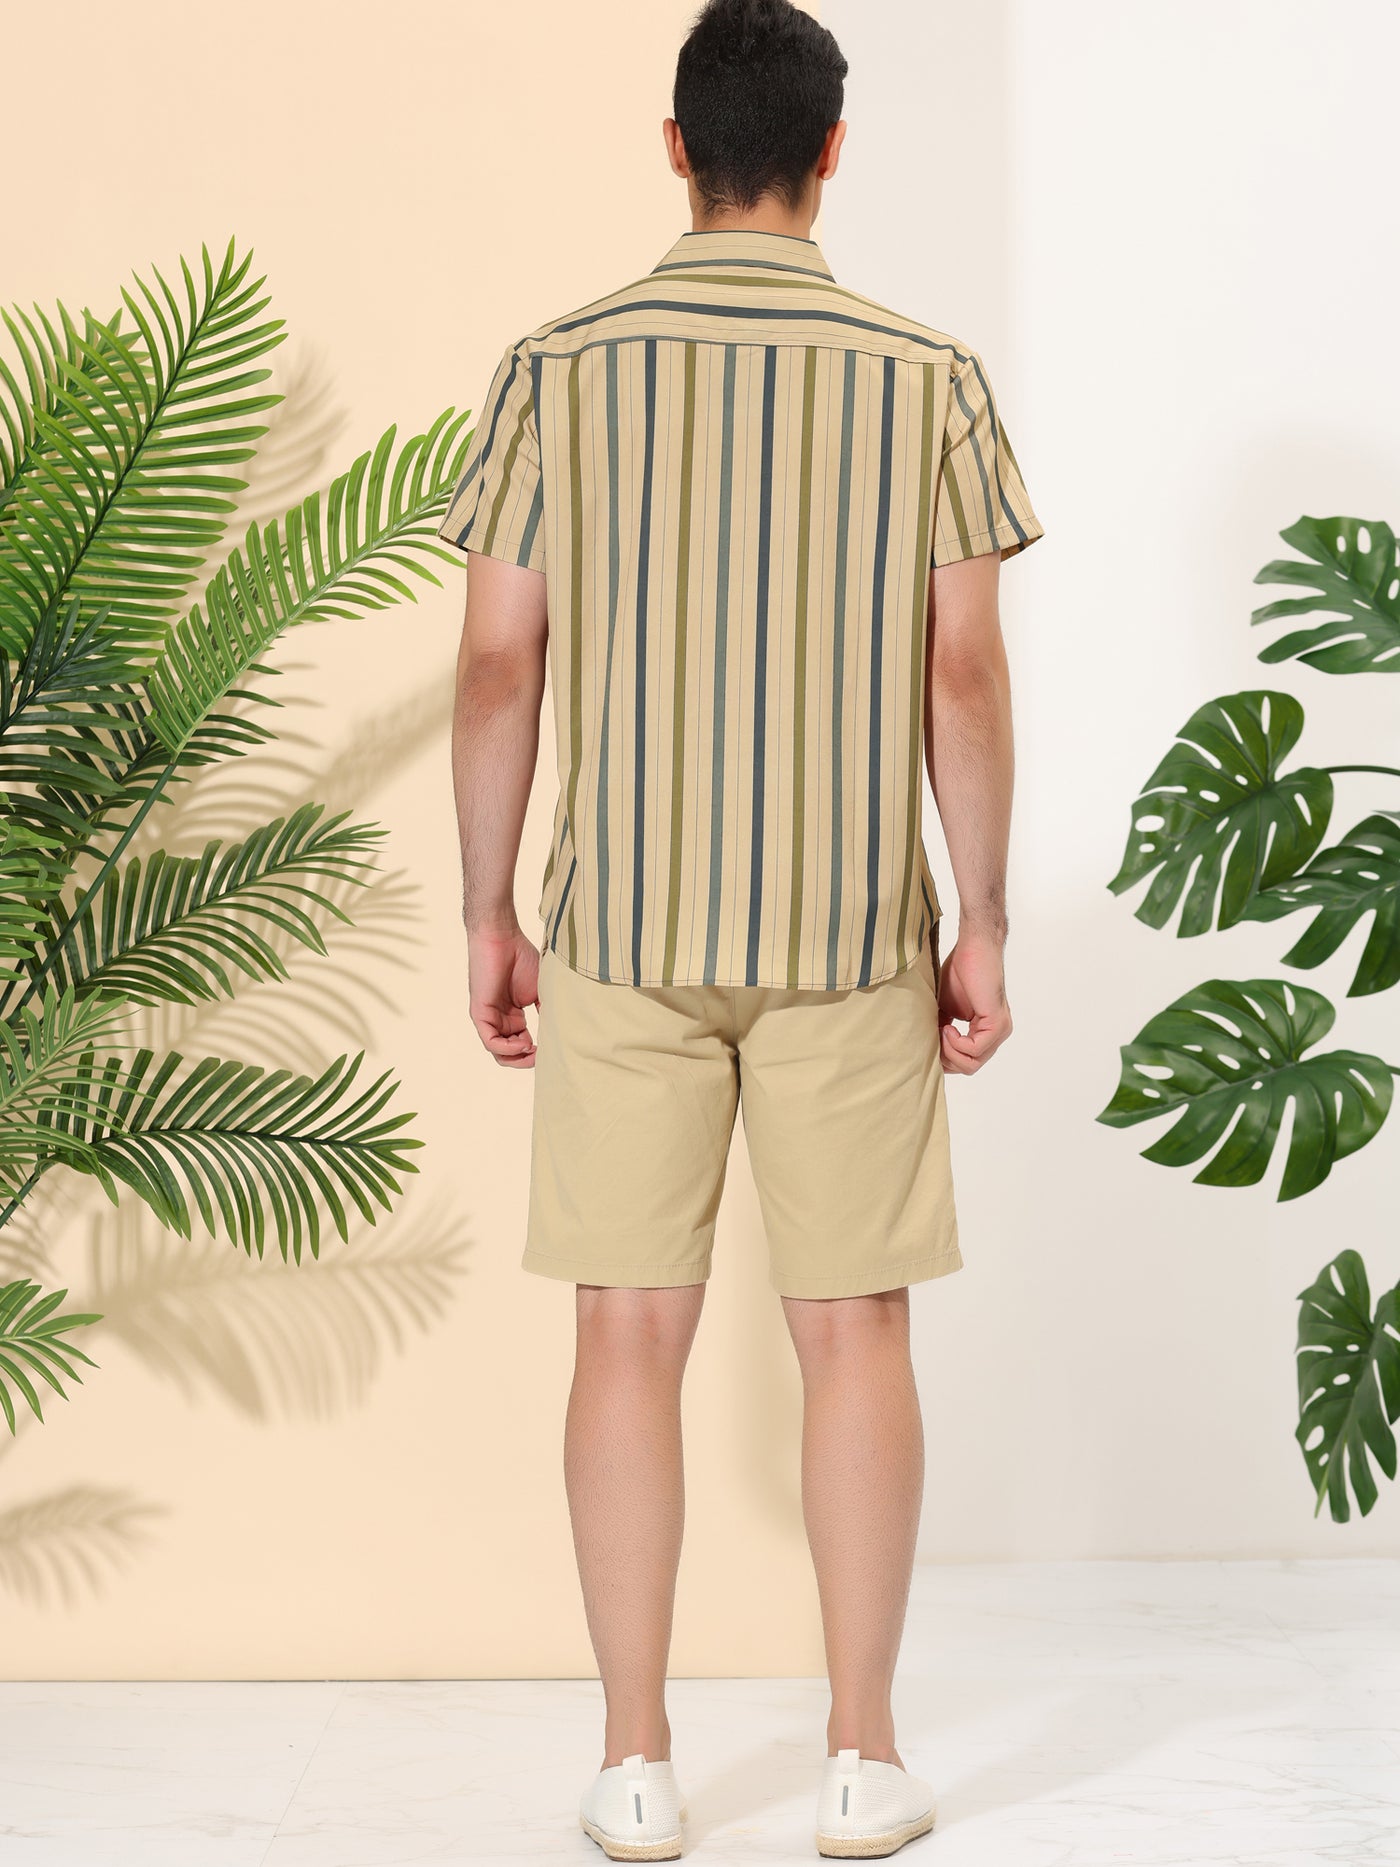 Bublédon Men's Summer Casual Short Sleeves Button Down Striped Shirt